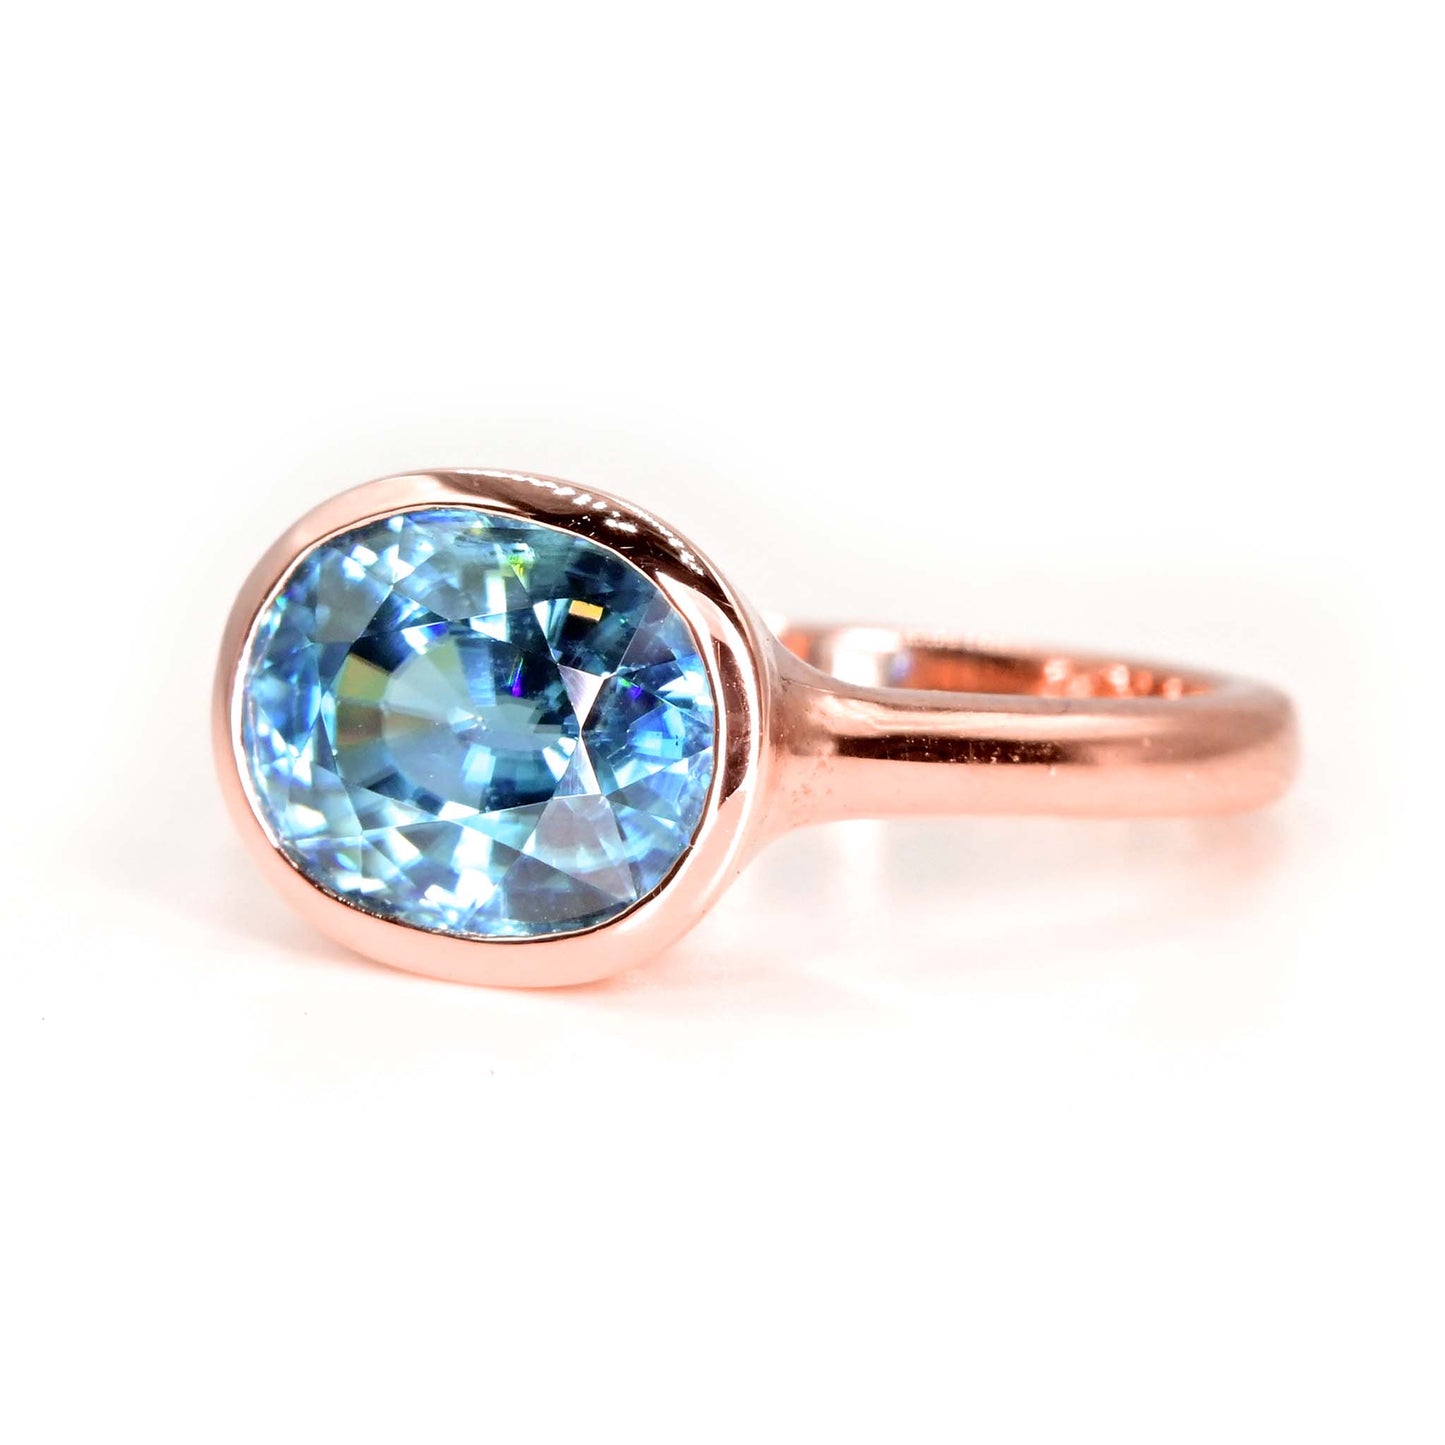 Amazing Thai Blue Zircon gemstone ring with 14k rosegold